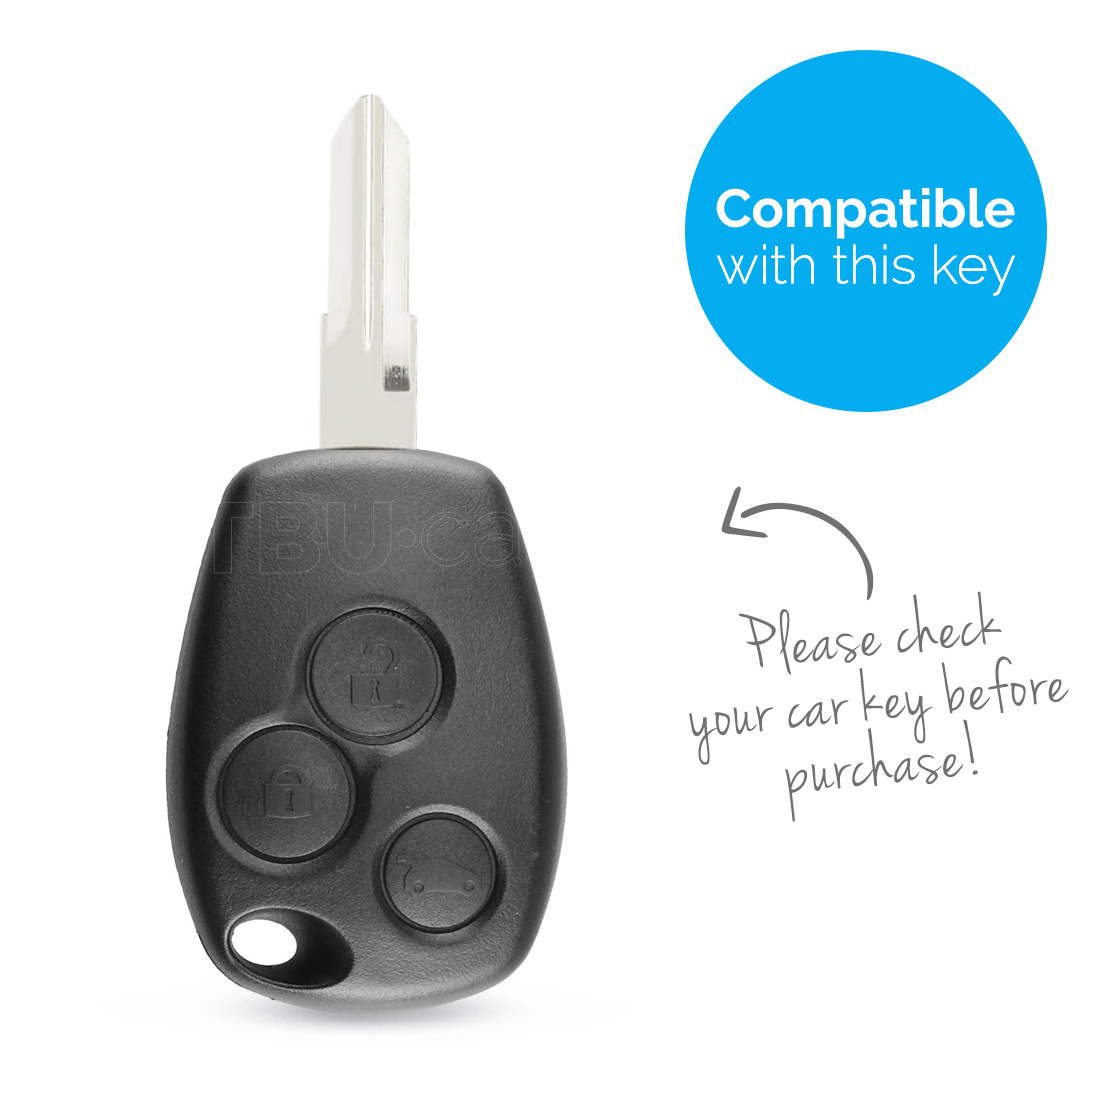 TBU car Autoschlüssel Hülle kompatibel mit Audi 3 Tasten (Keyless Entry) -  Schutzhülle aus Silikon - Auto Schlüsselhülle Cover in Schwarz